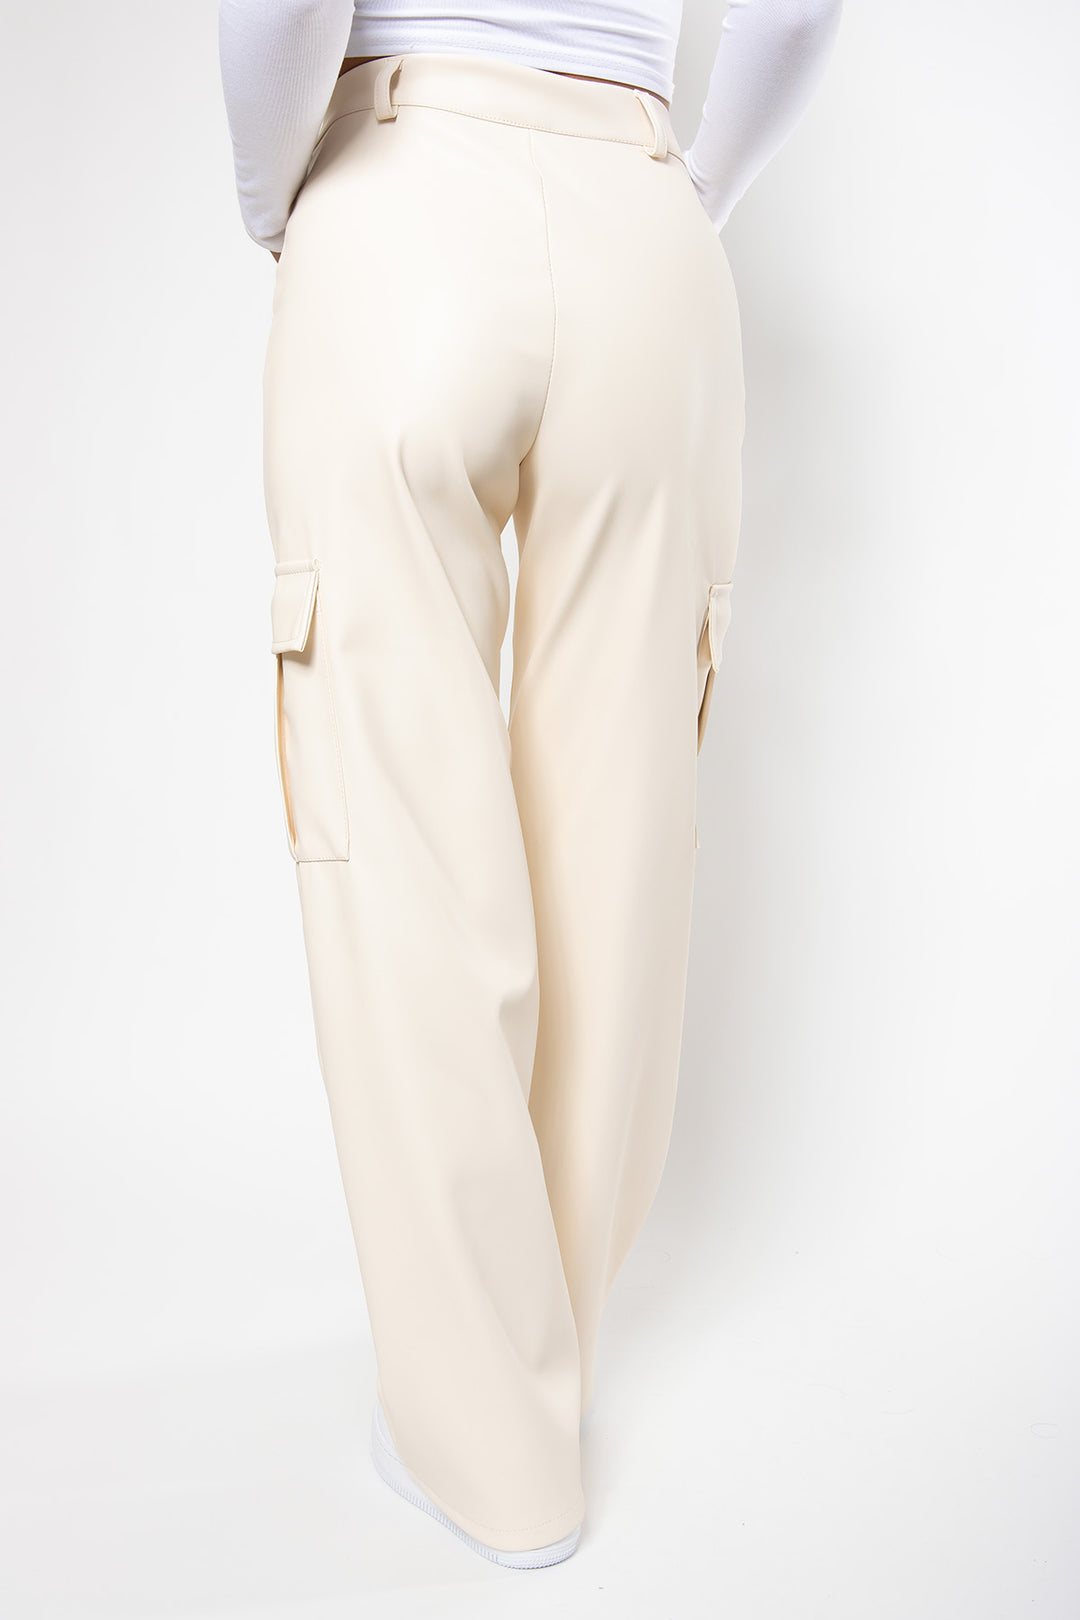 Vickey Leatherlook Cargo Pants - Cream Pants Routines Fashion   